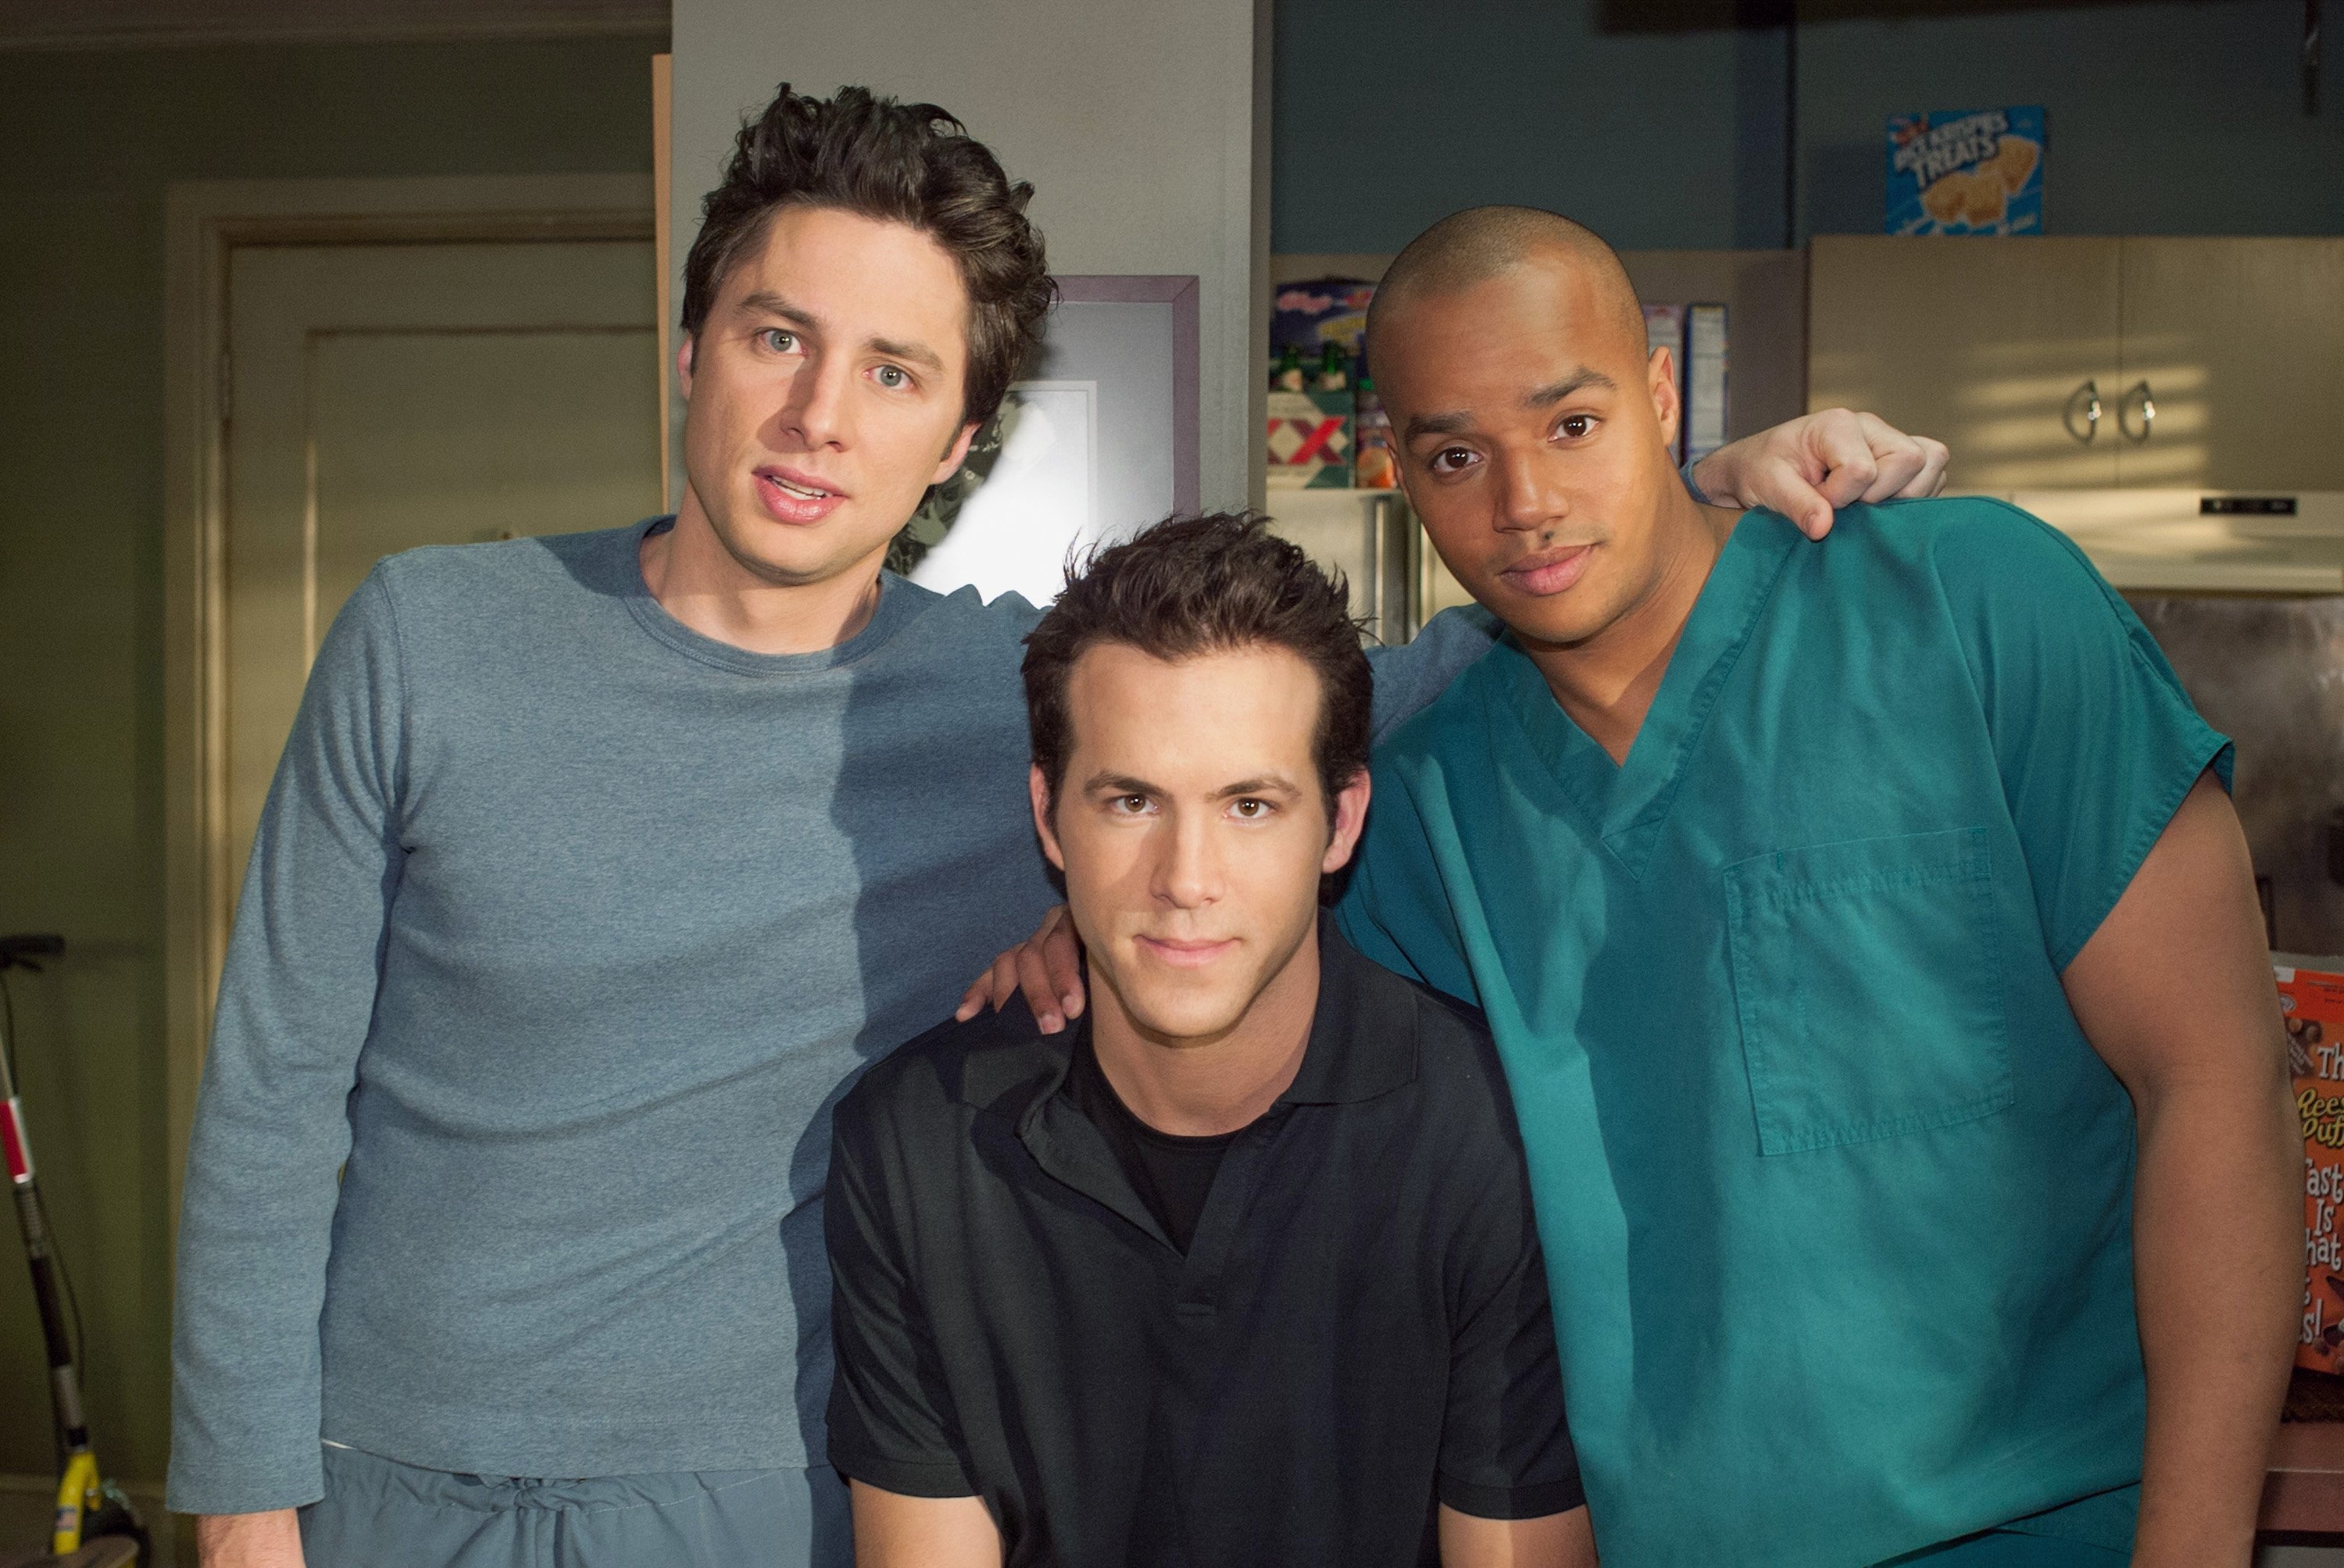 (l-r) Zach Braff as J.D., Ryan Reynolds as Spence, and Donald Faison as Turk in 'Scrubs'